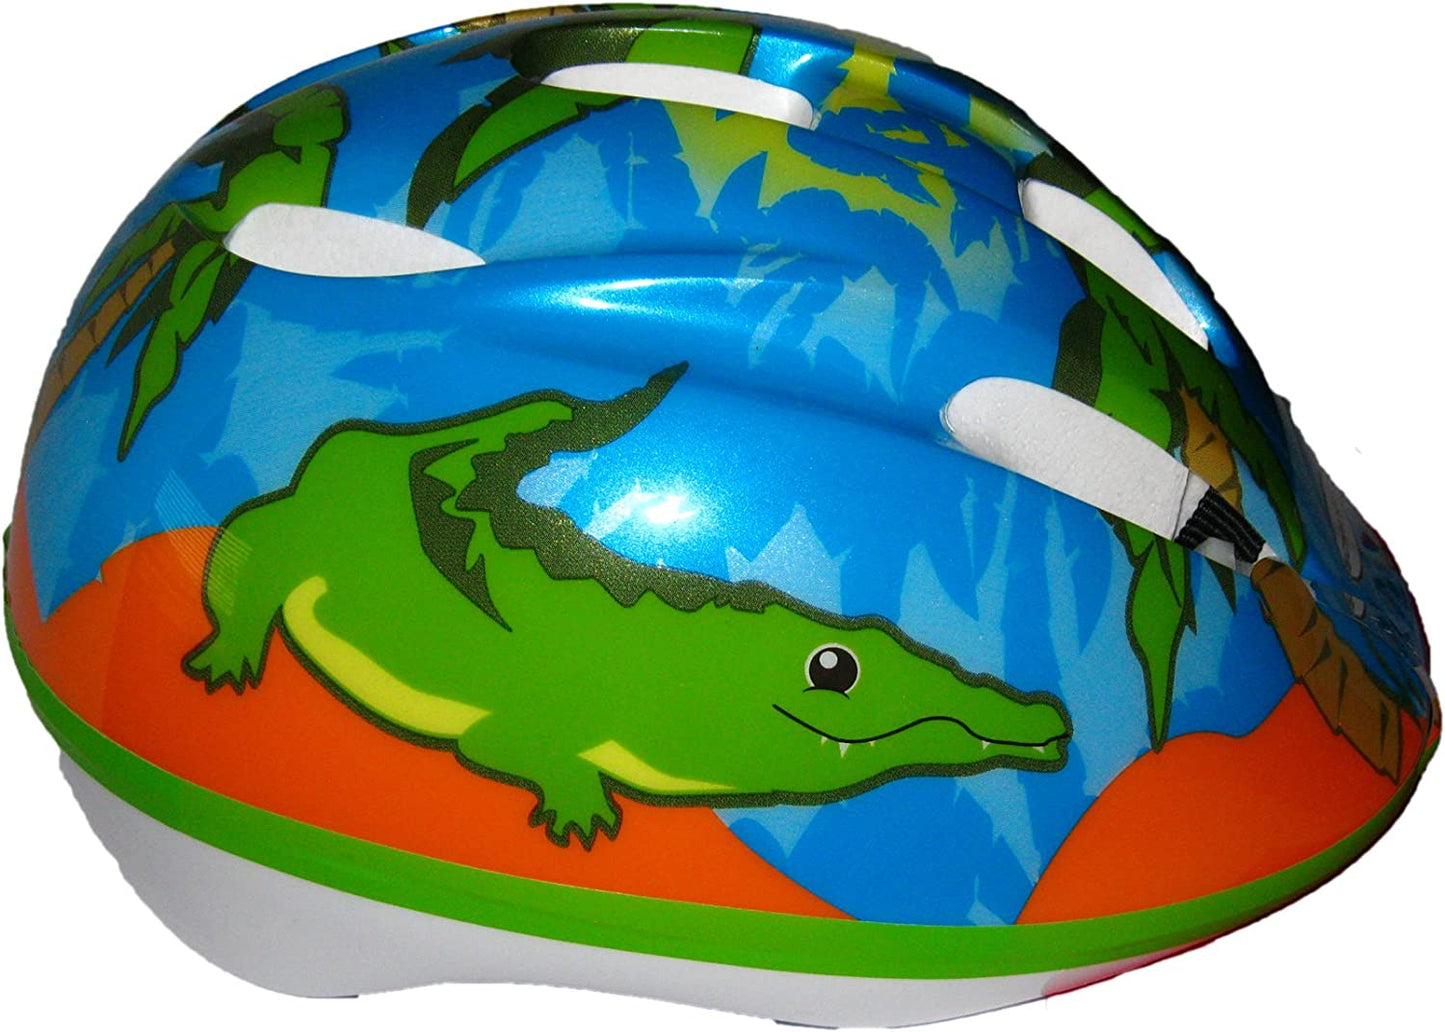 Schwinn Microshell Mite Toddler Helmet +3 years Alligator